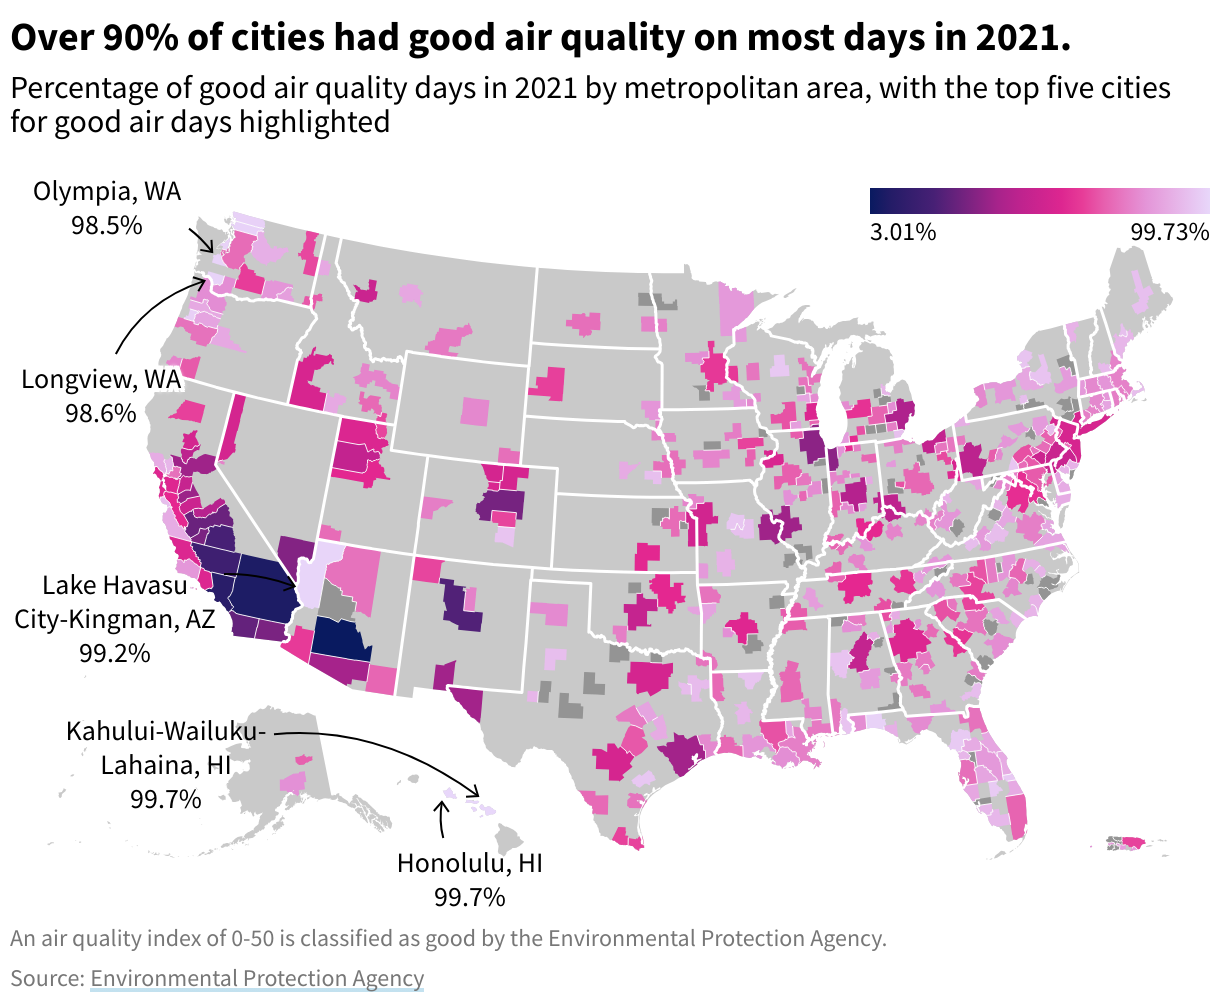 Map of metro areas colored by % good air quality days. The give best are Honolulu, Hawaii (99.7%), Kahului-Wailuku-Lahaina, HI(99.7%), Lake Havasu City-Kingman, AZ (99.2%), Longview, WA (98.6%), Olympia, WA (98.5%).